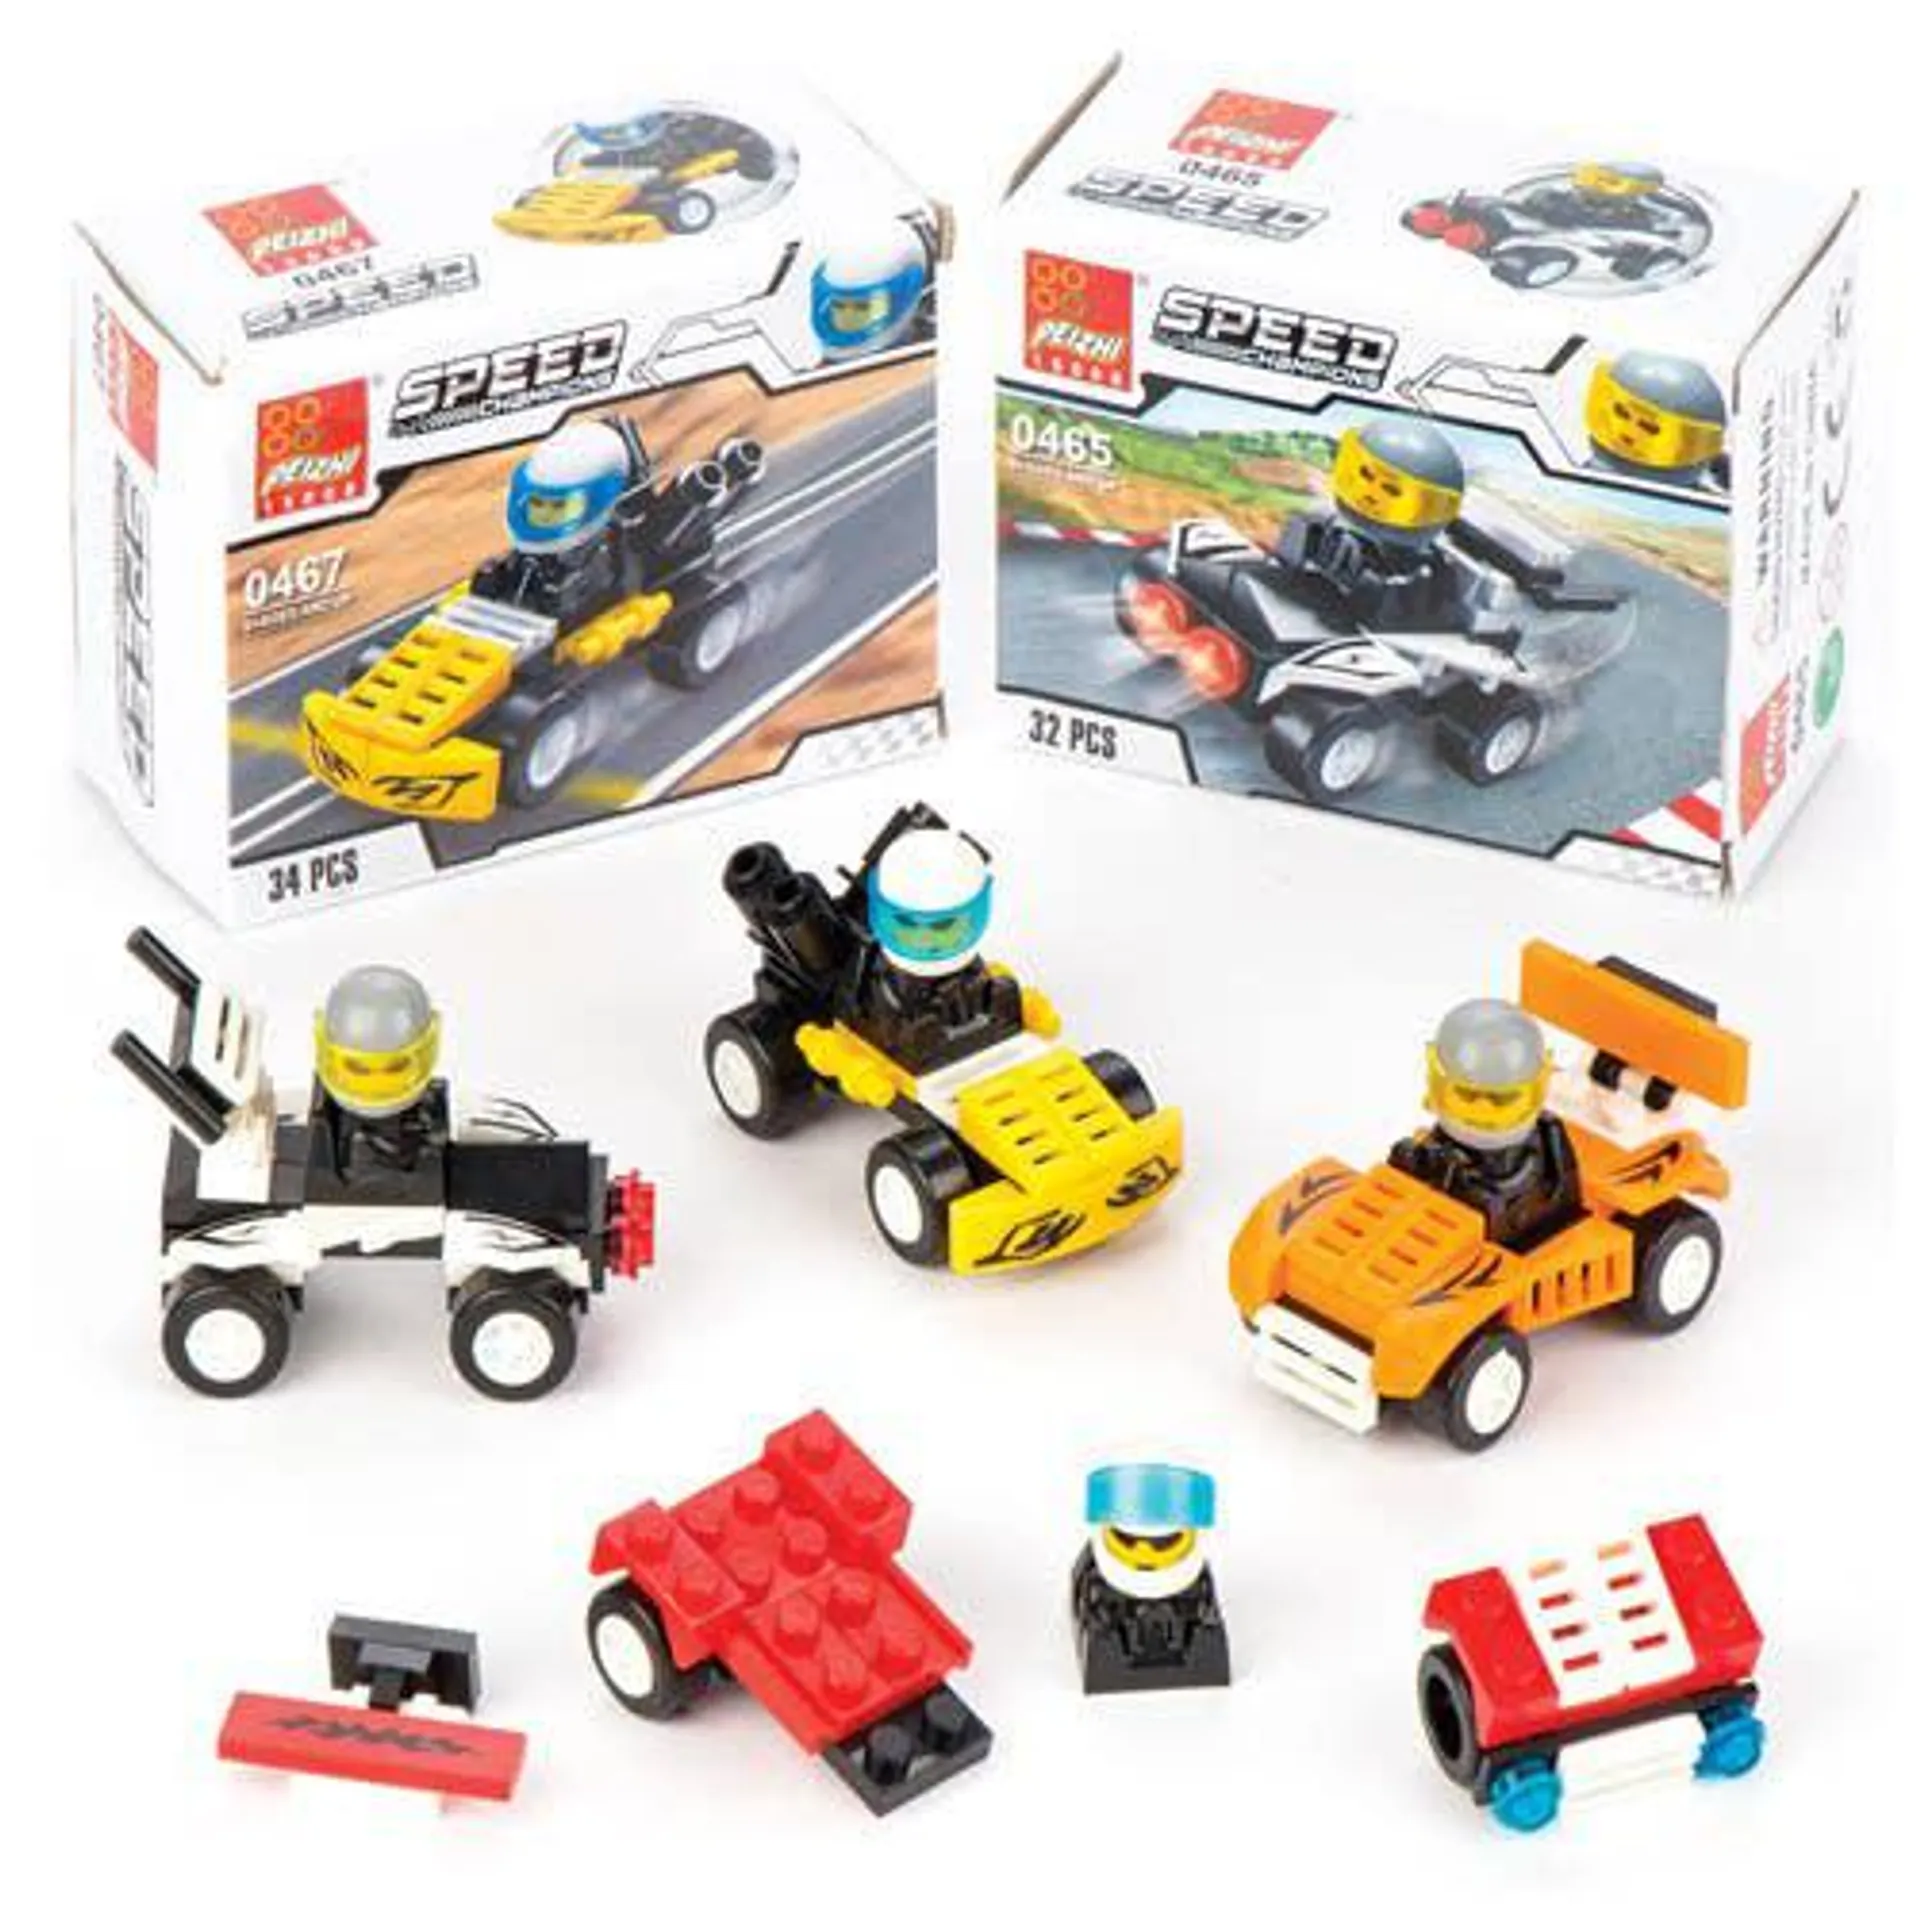 Speed Racer Building Brick Kits